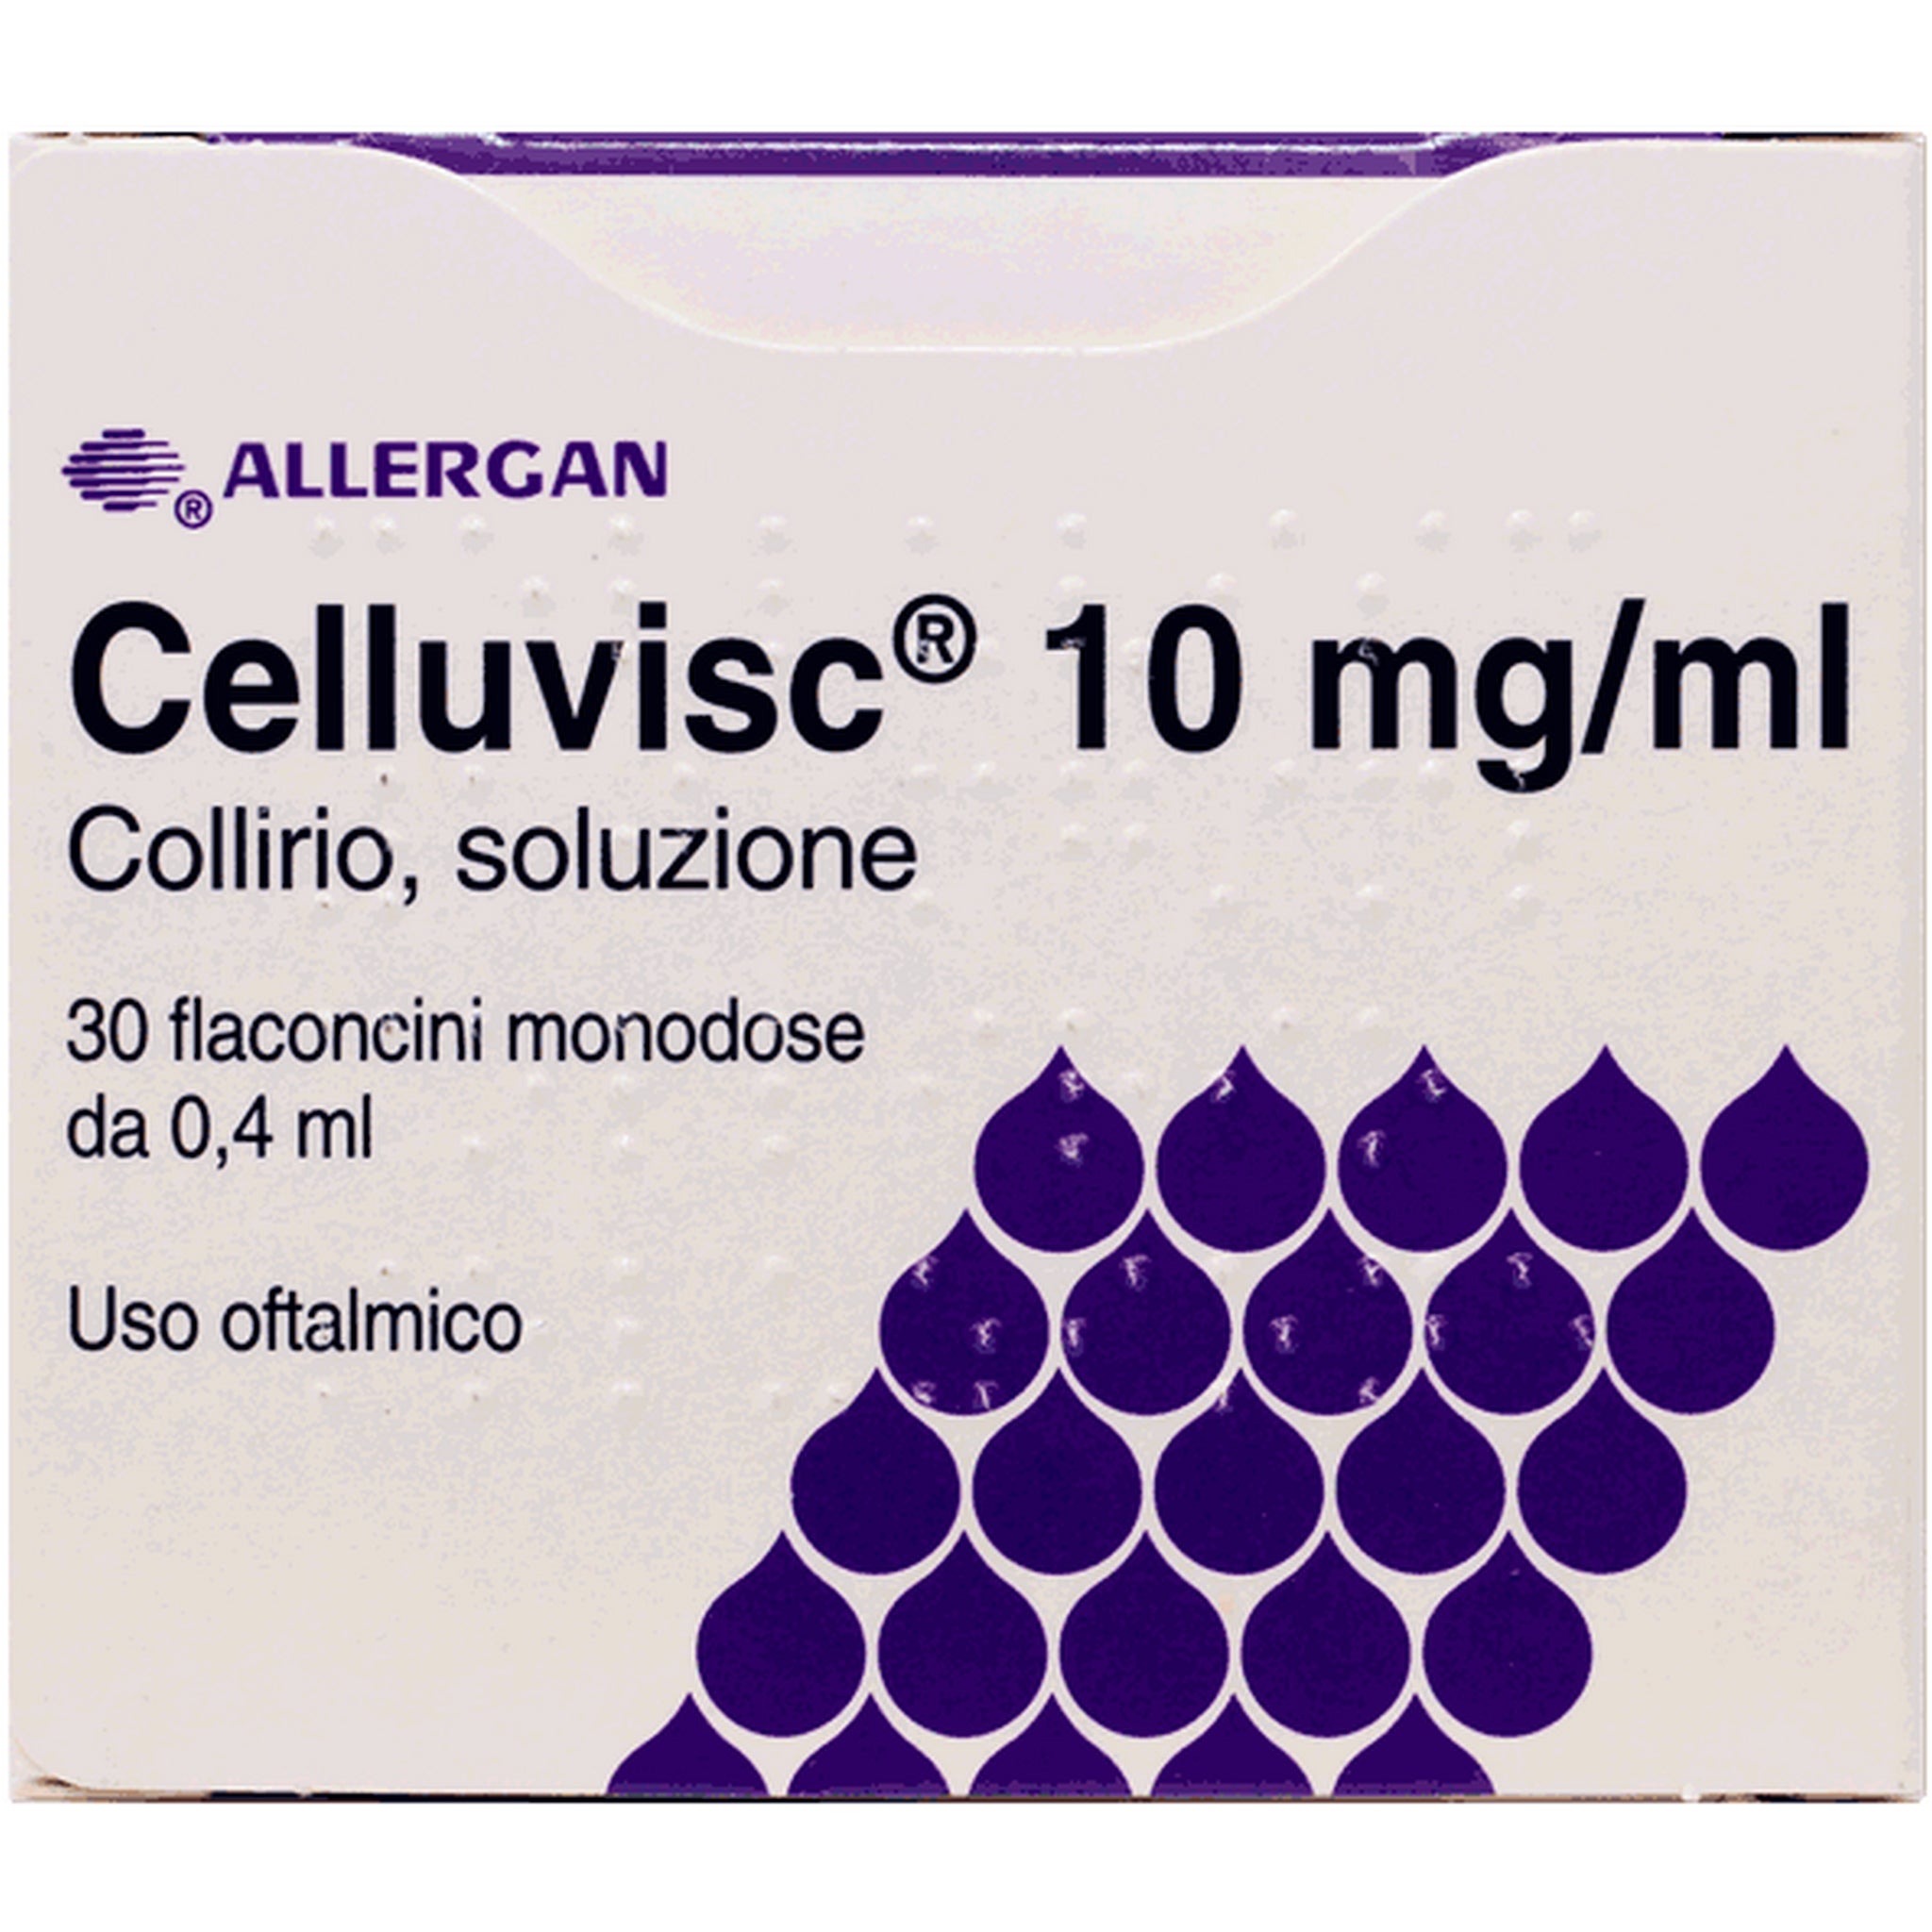 Celluvisc Coll30f 0,4ml10mg/ml